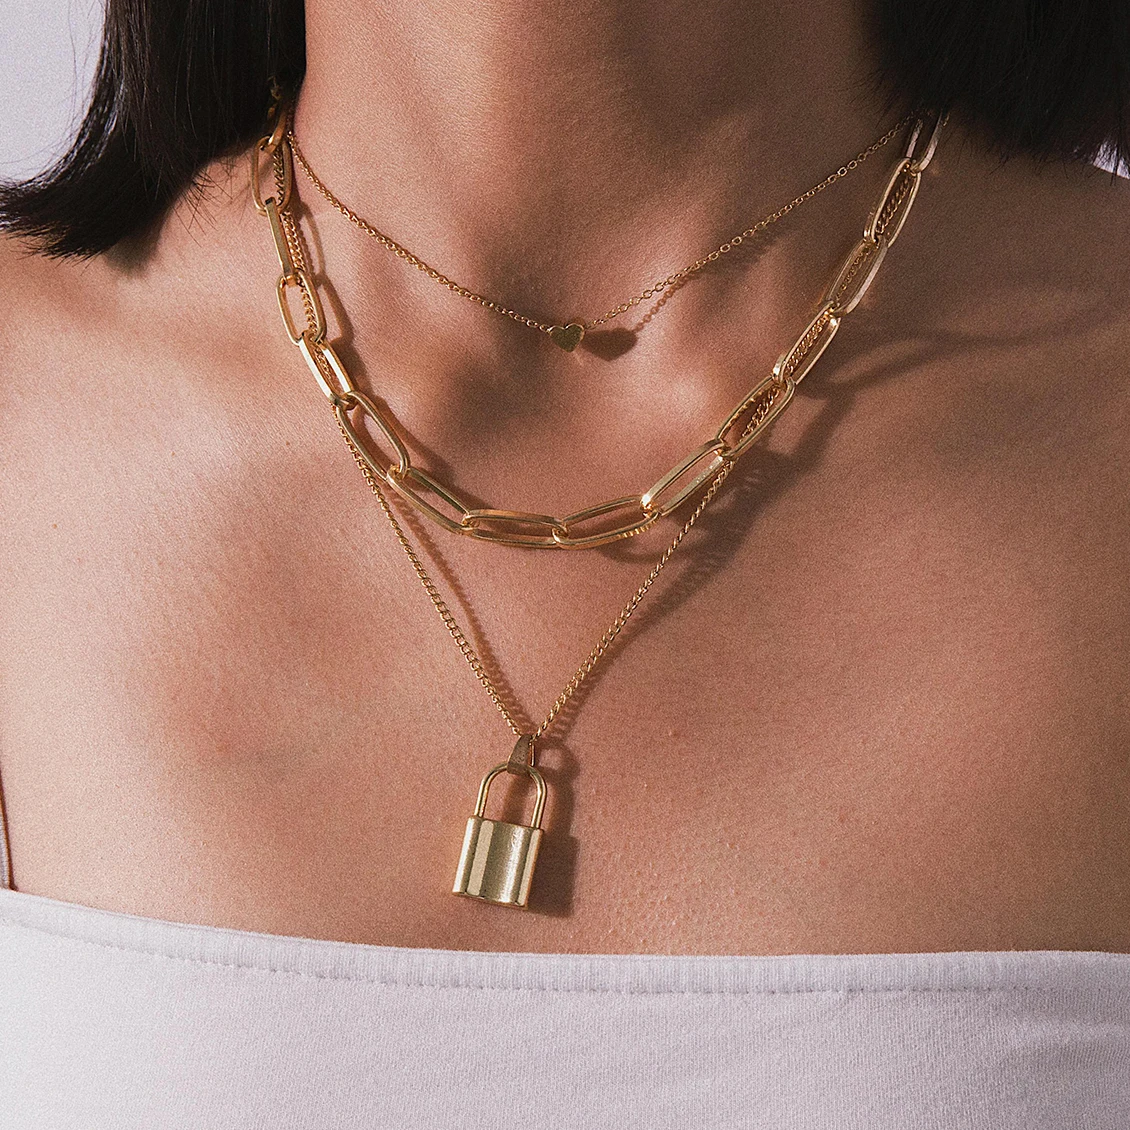 

Ingemark Multilayer Lock Pendant Choker Necklace for Women Vintage Love Heart Chain Grunge Aesthetic Egirl Jewelry Steampunk New